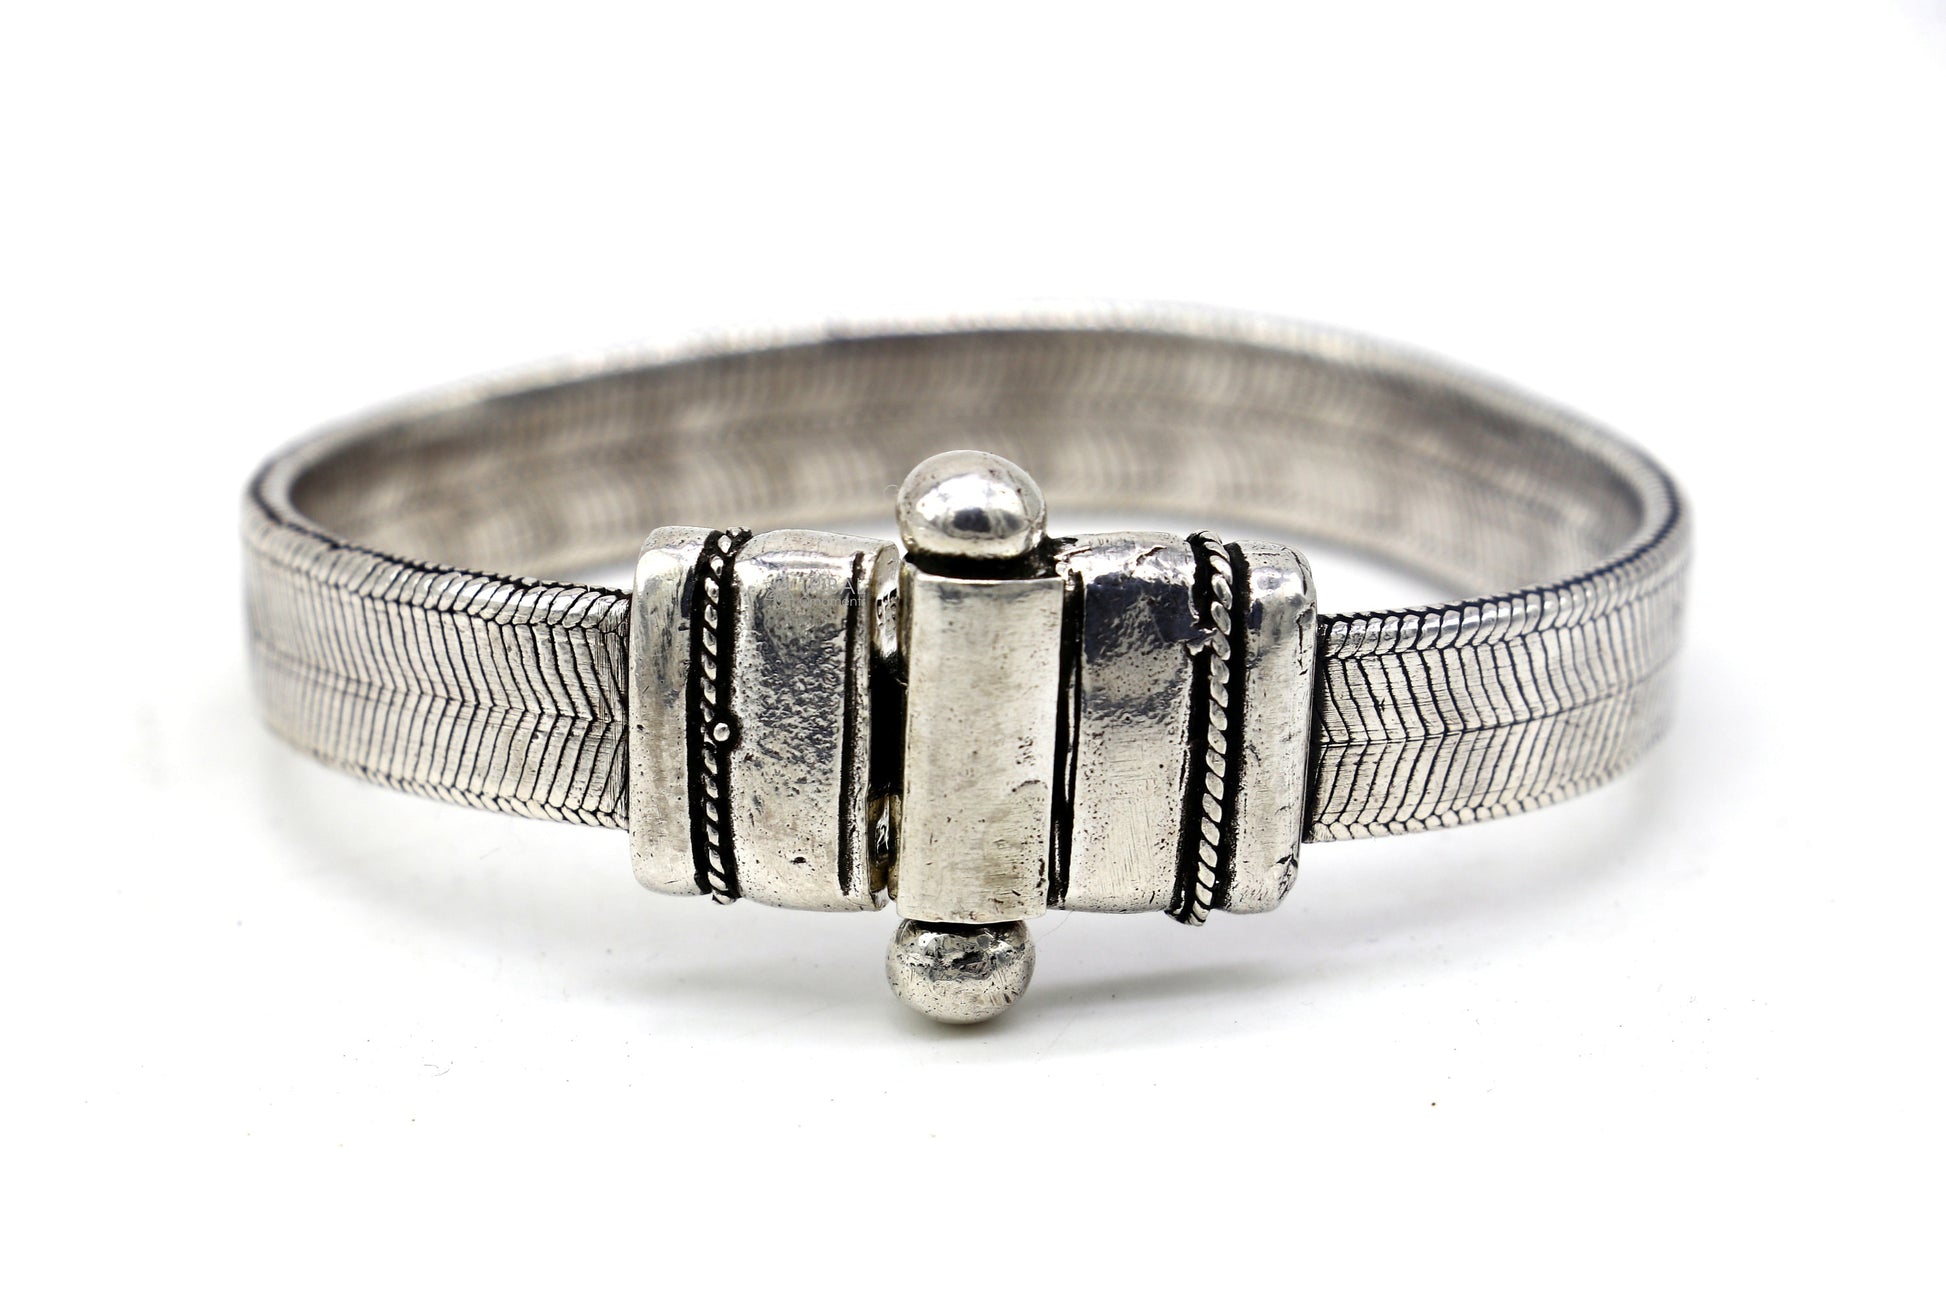 10MM" 925 sterling silver customized snake chain belt bracelet vintage design stylish men's gifting wrist belt jewelry sbr727 - TRIBAL ORNAMENTS